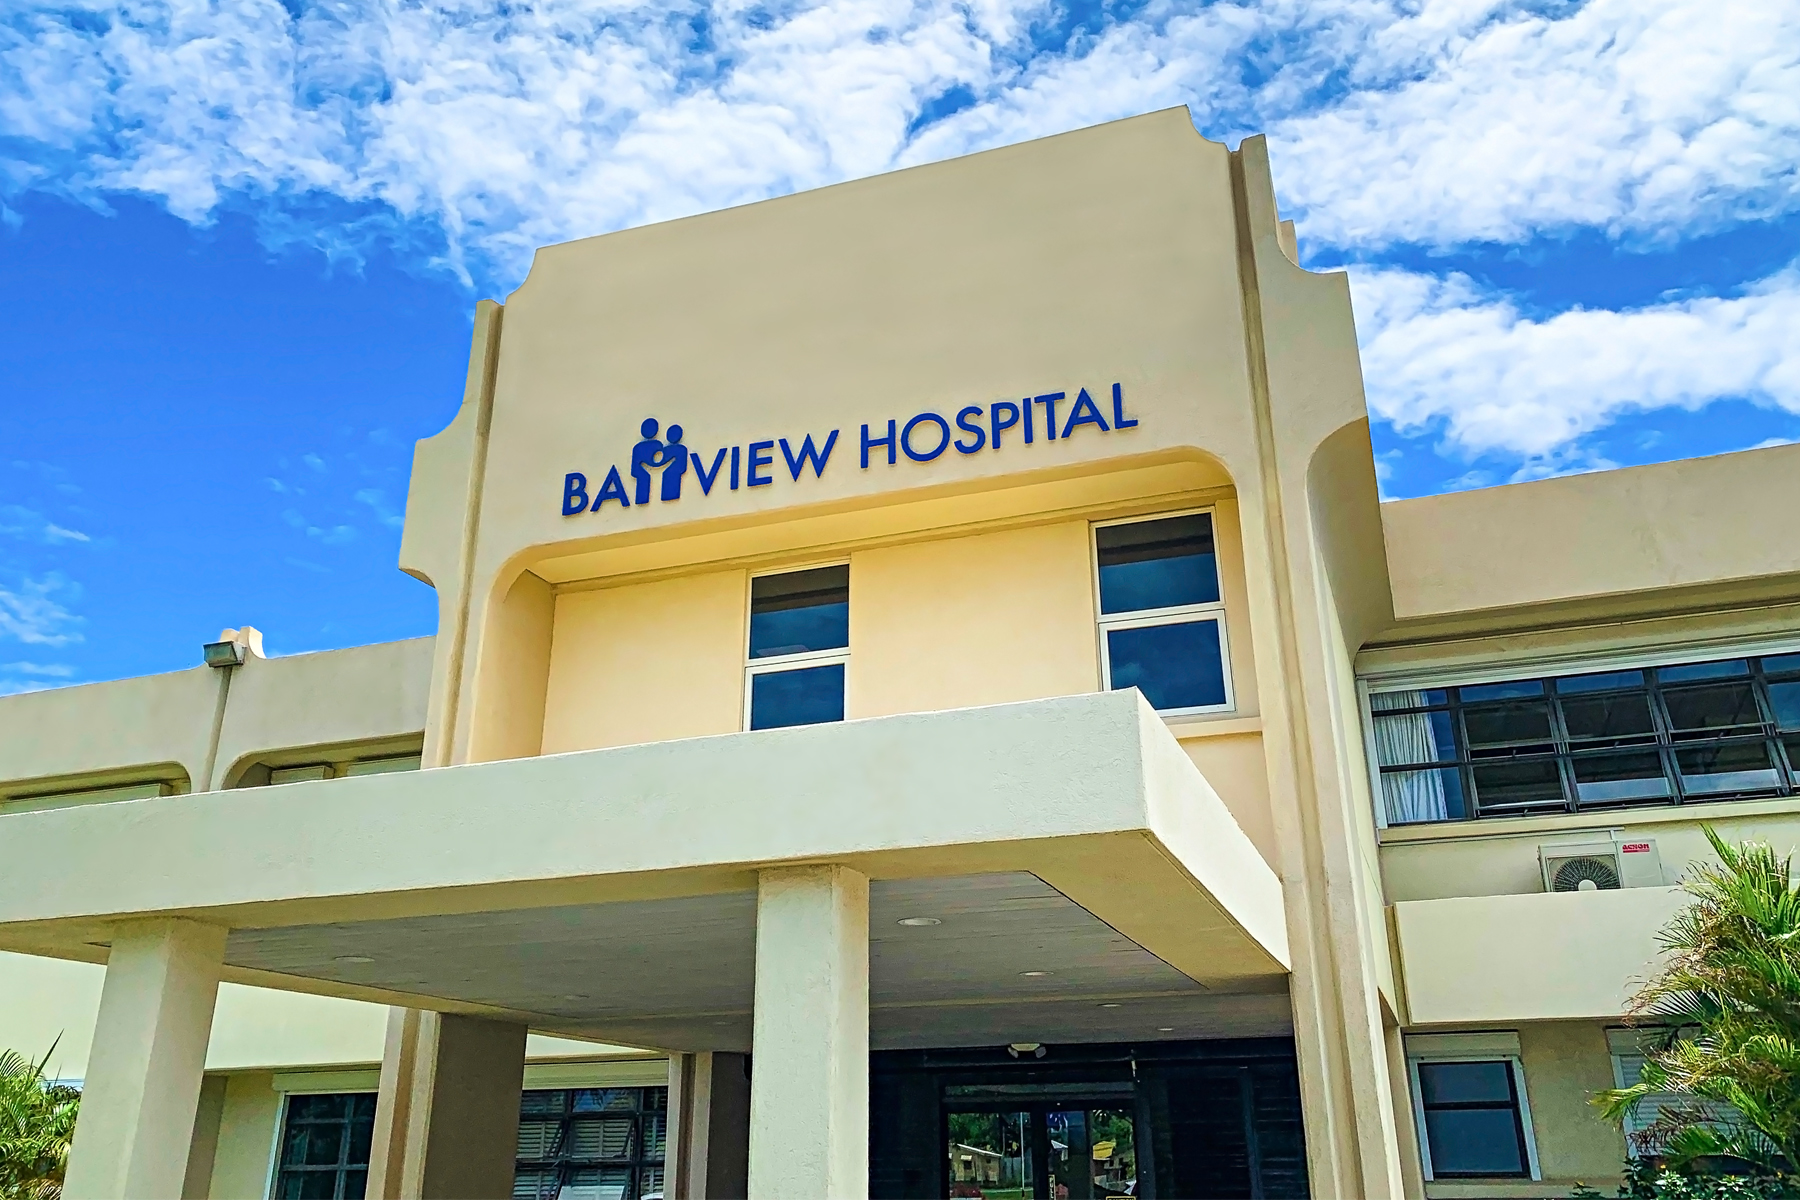 Bayview Hospital Building